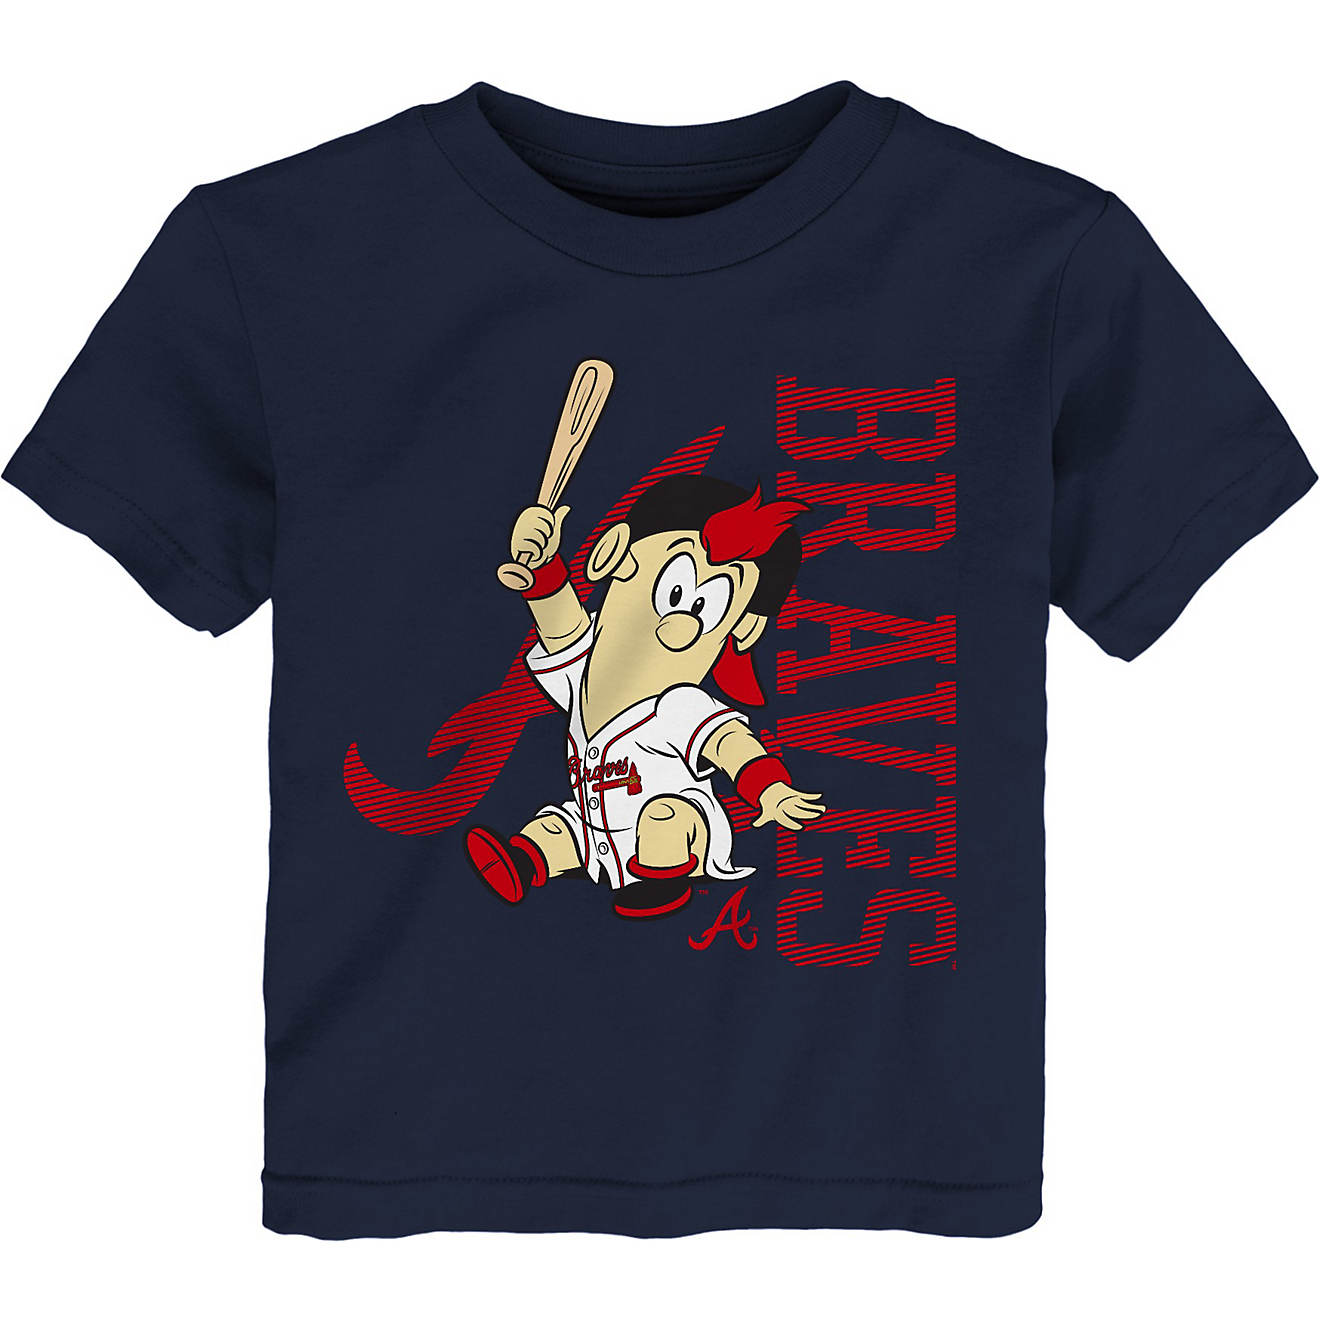 Outerstuff Toddler Boys' Atlanta Braves Baby Mascot 2.0 Graphic T-shirt